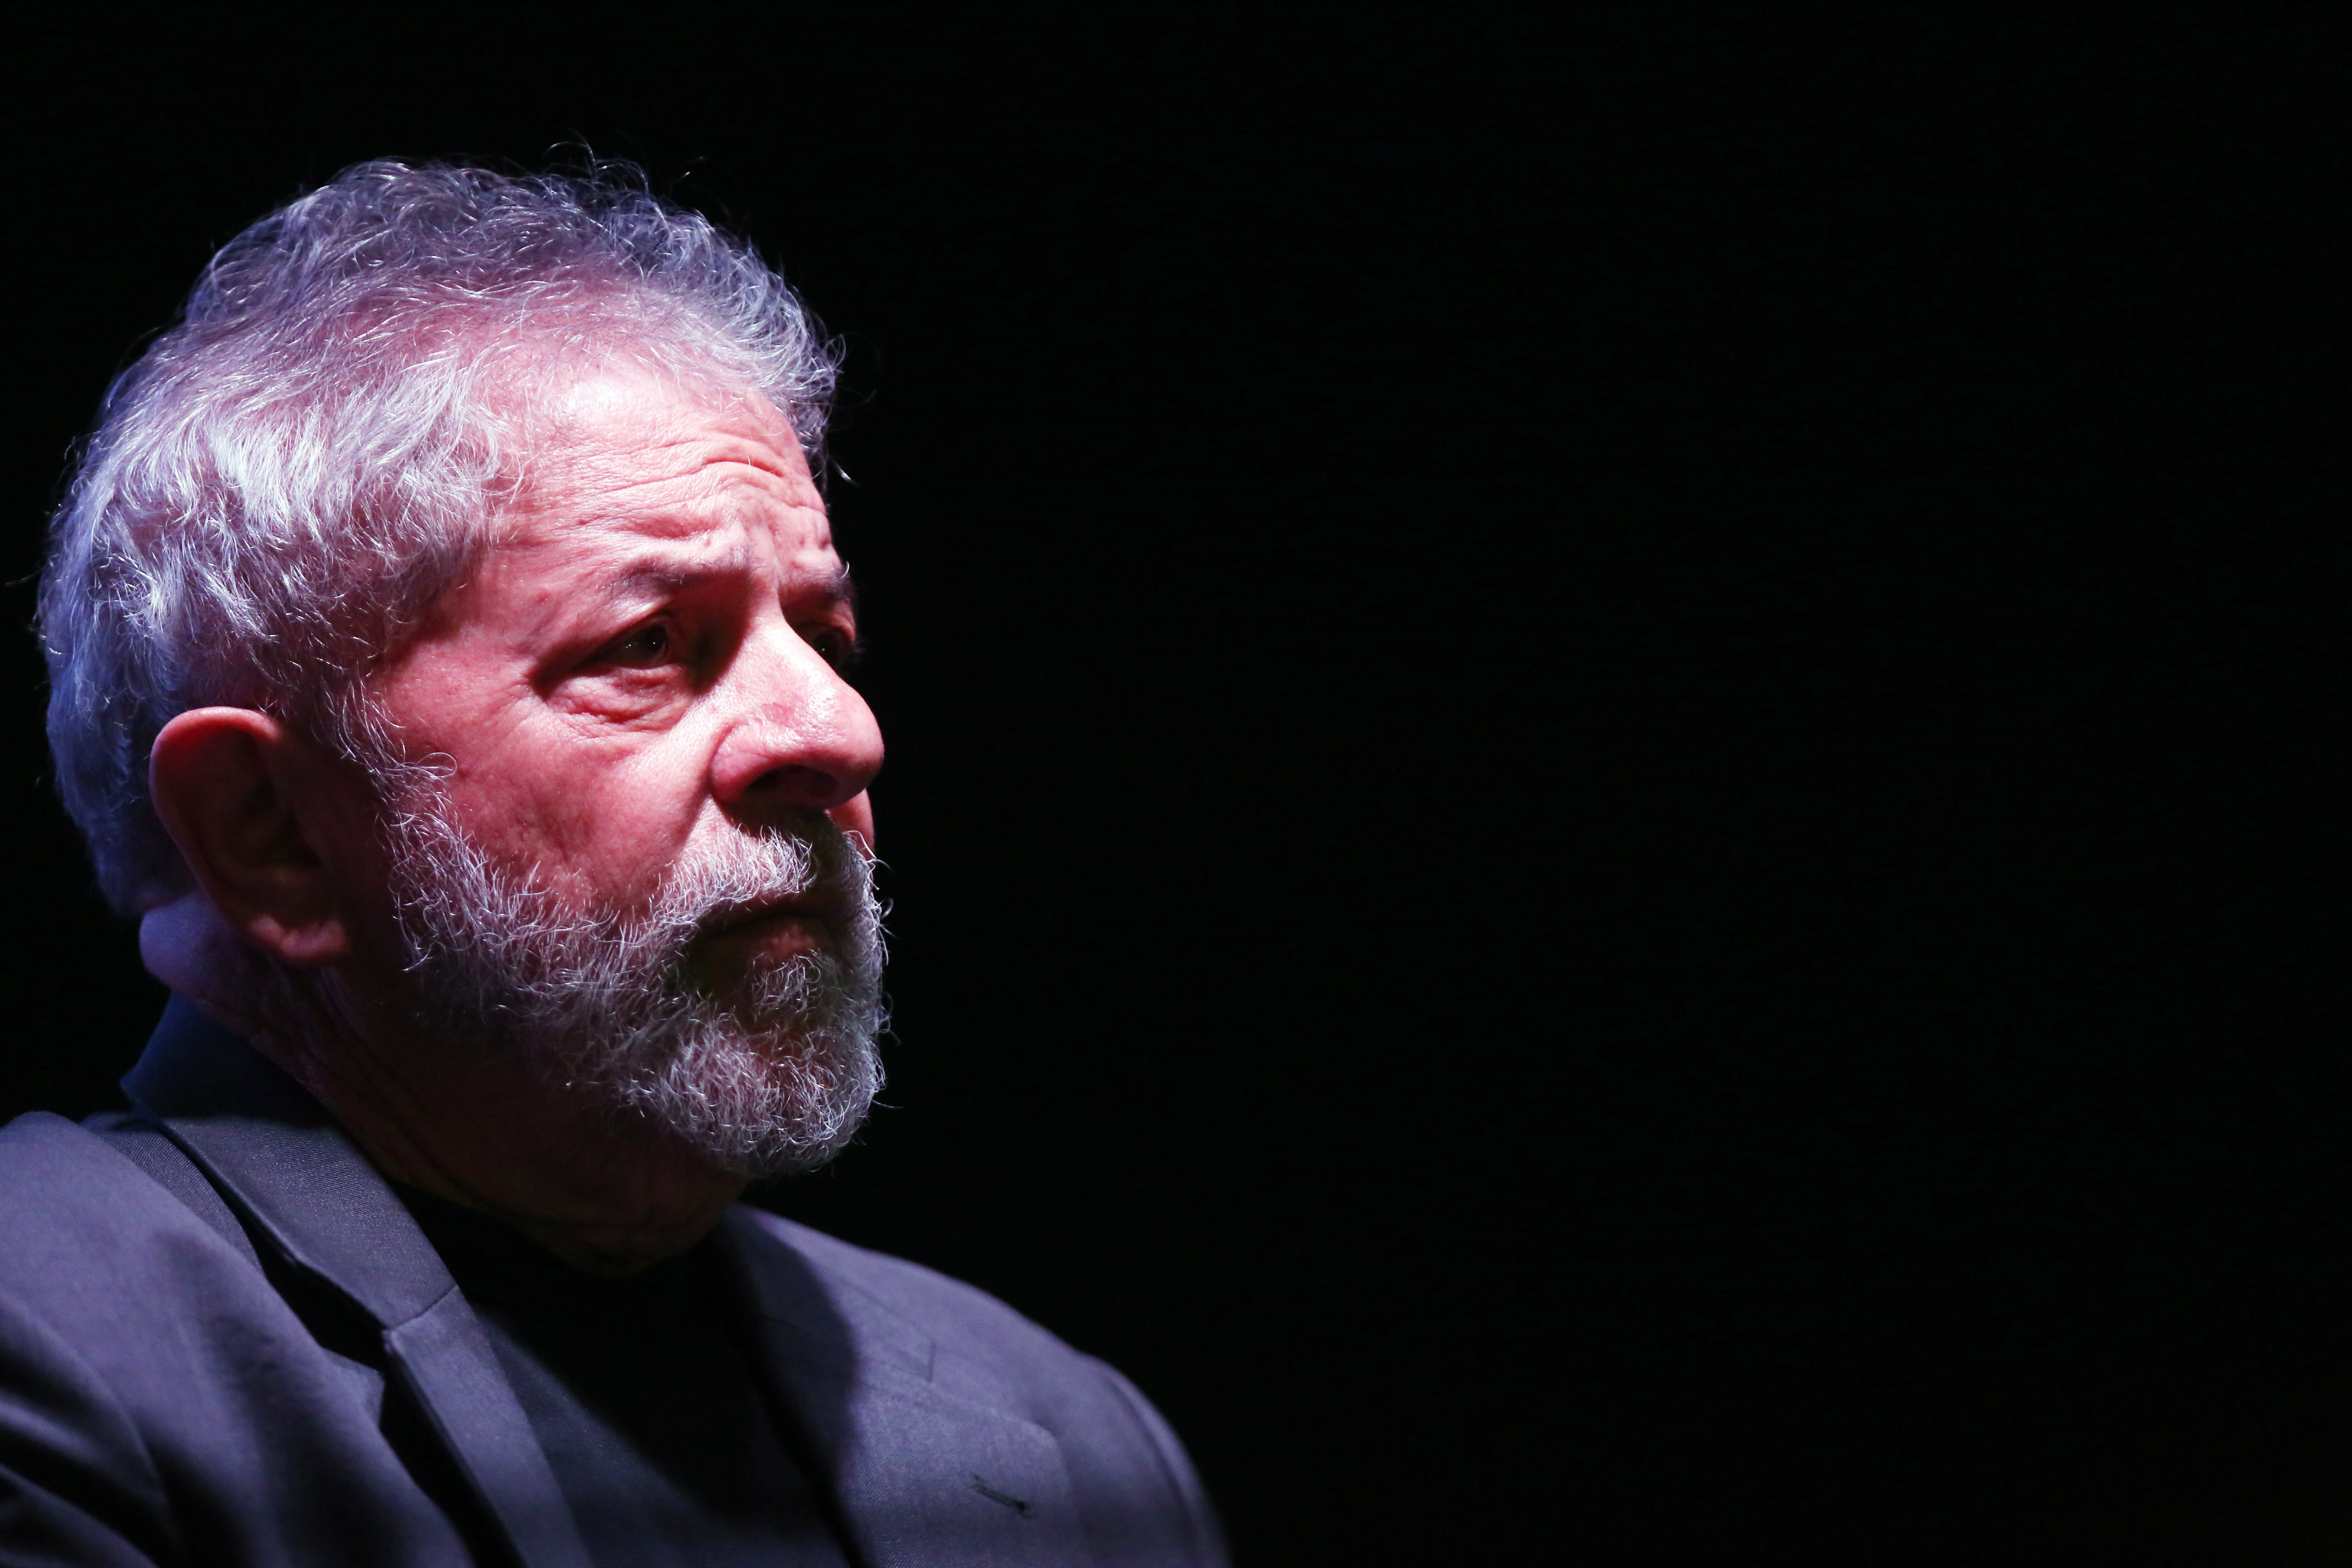 O ex-presidente Lula 